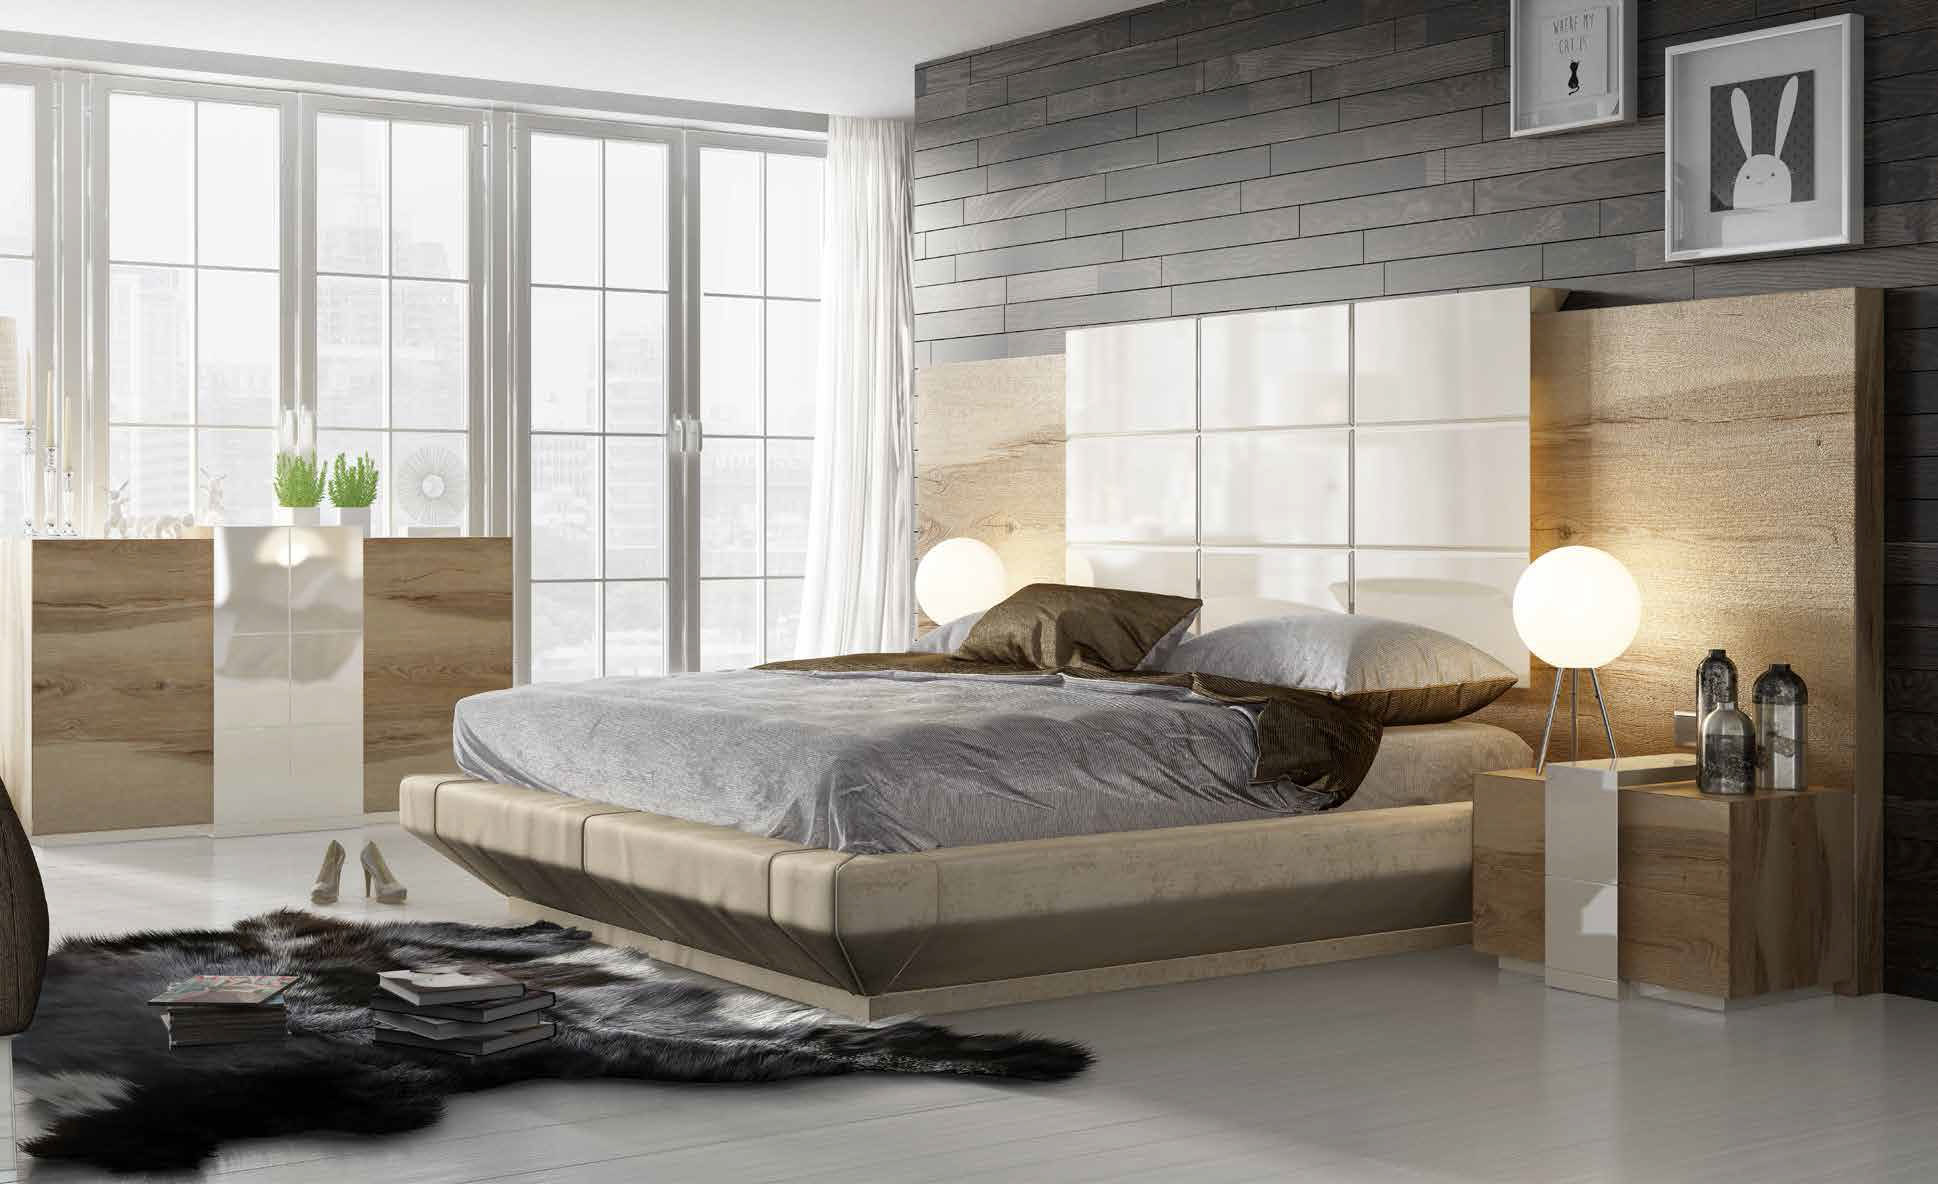 Brands Garcia Sabate, Modern Bedroom Spain DOR 04